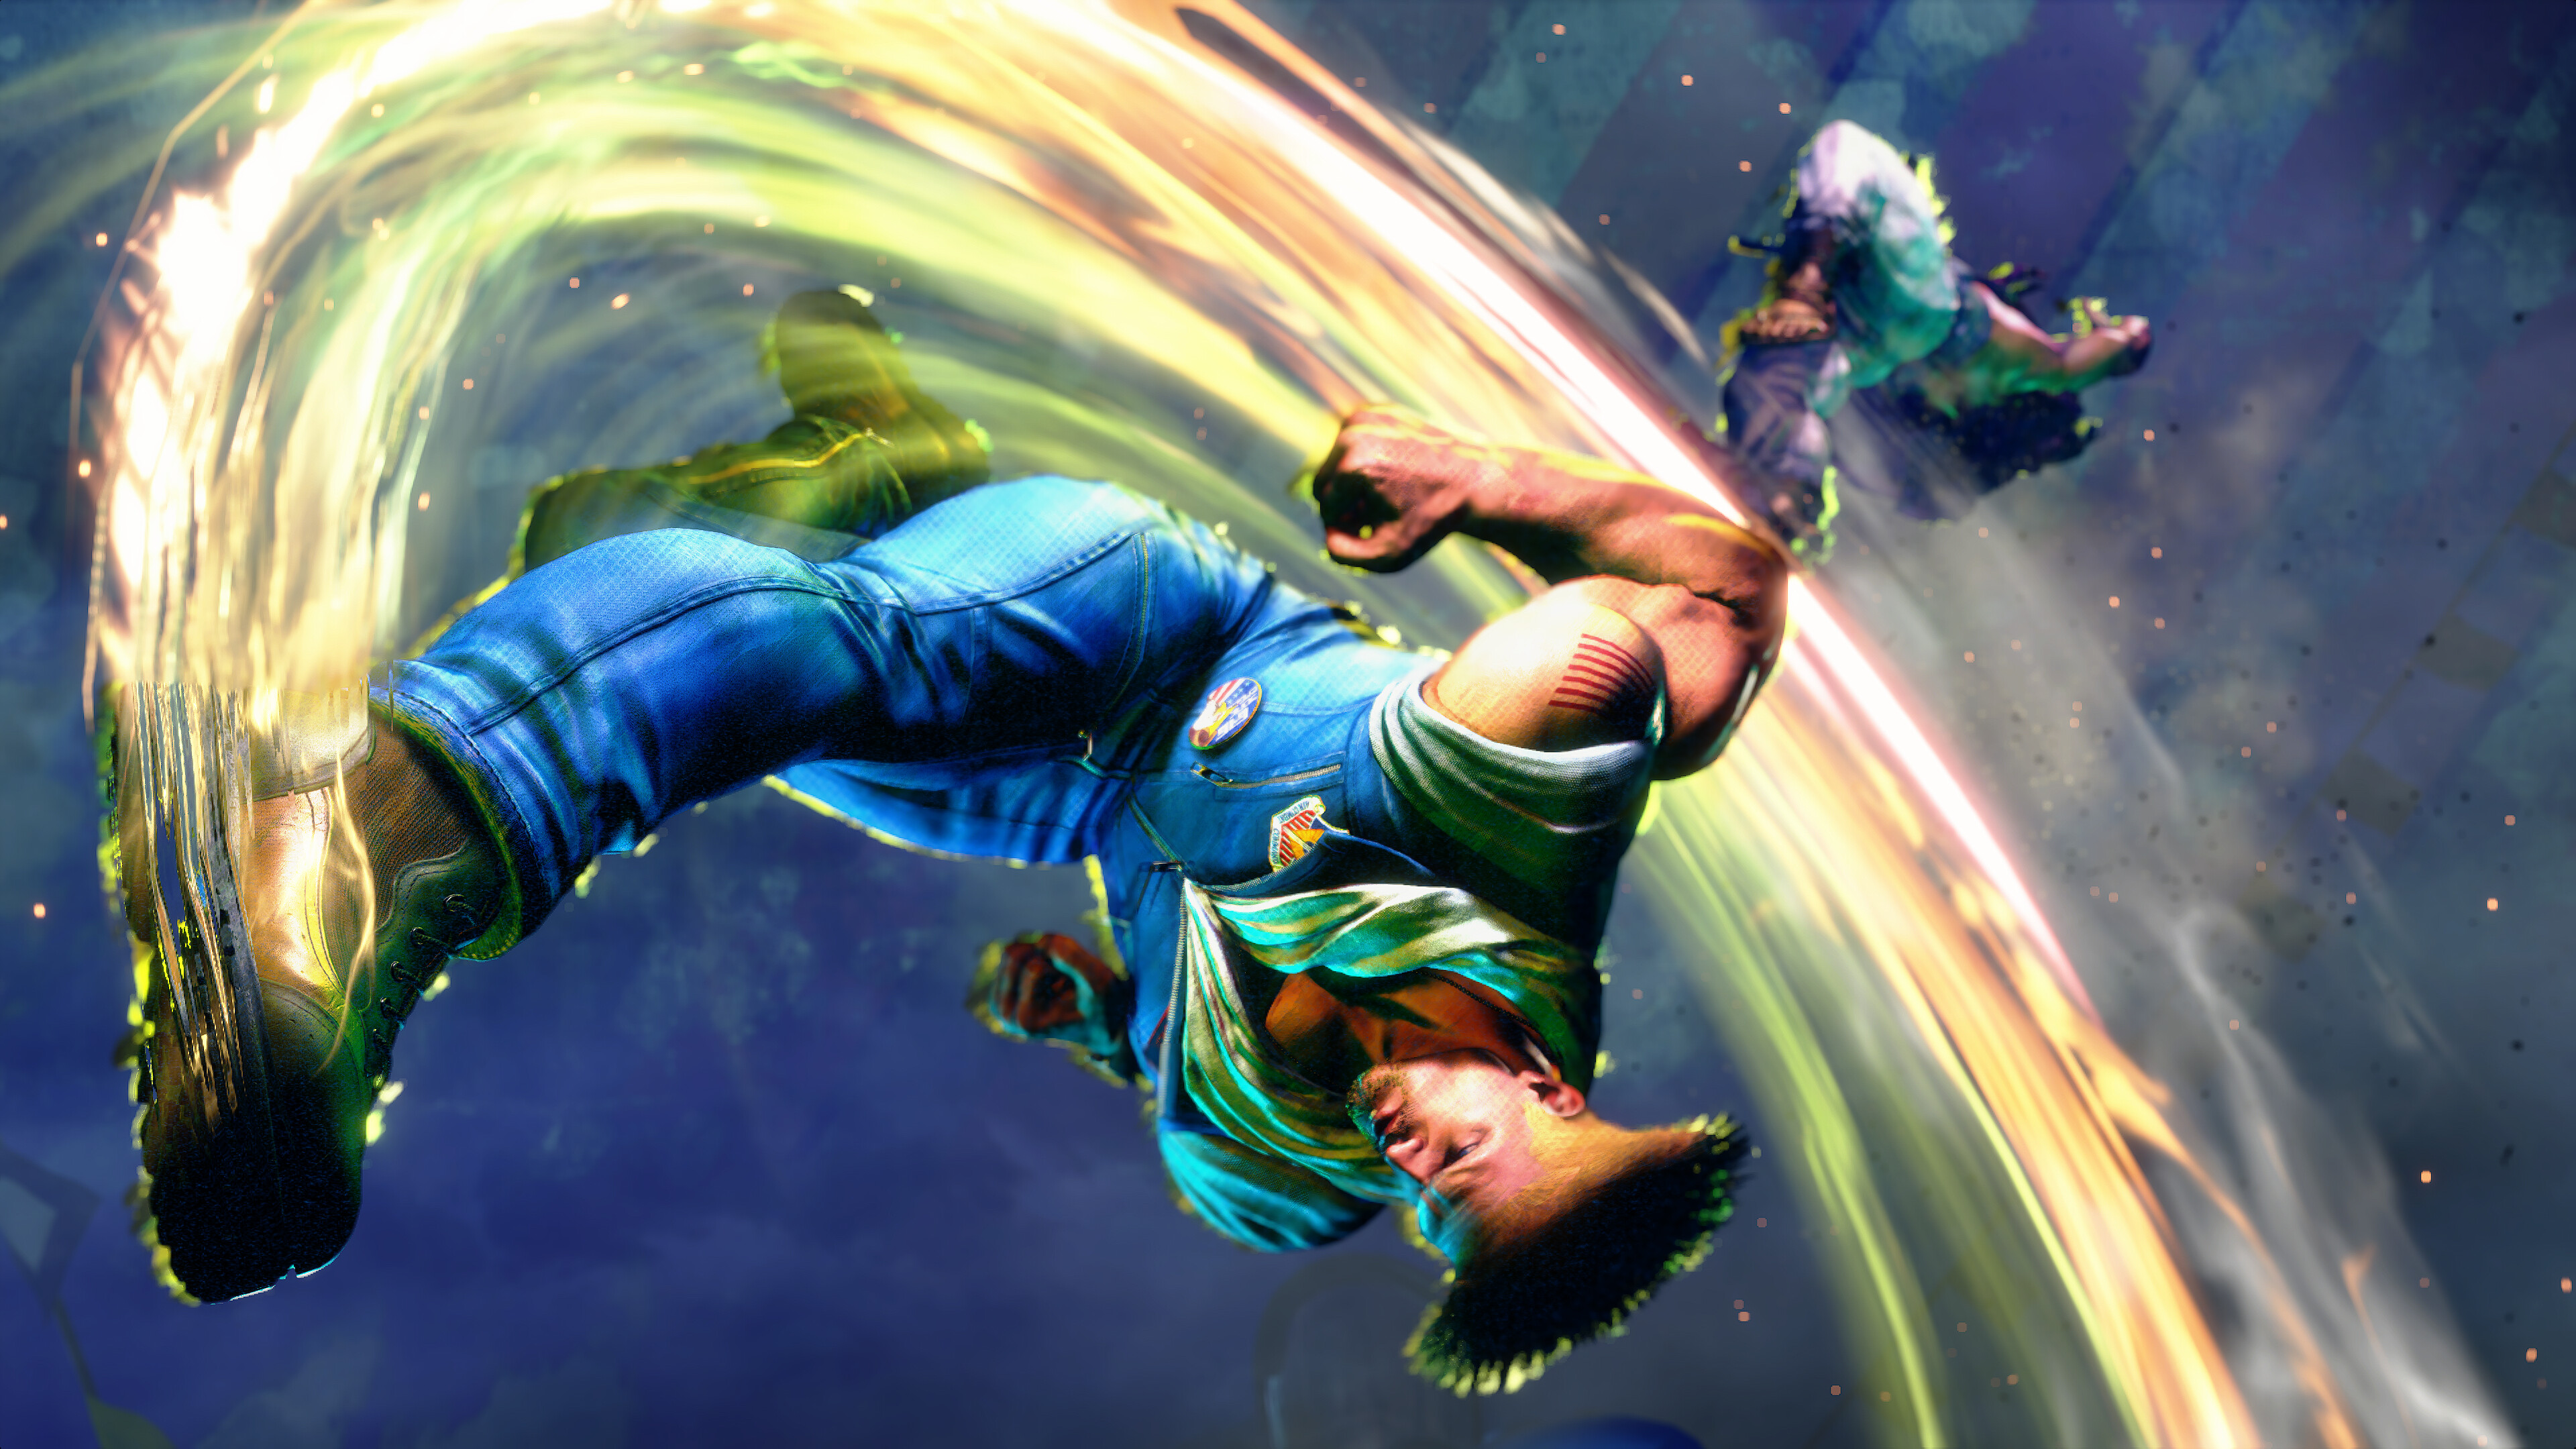 Guile ปล่อย Ryu ขึ้นไปในอากาศด้วย Sonic Kick ใน Street Fighter 6 